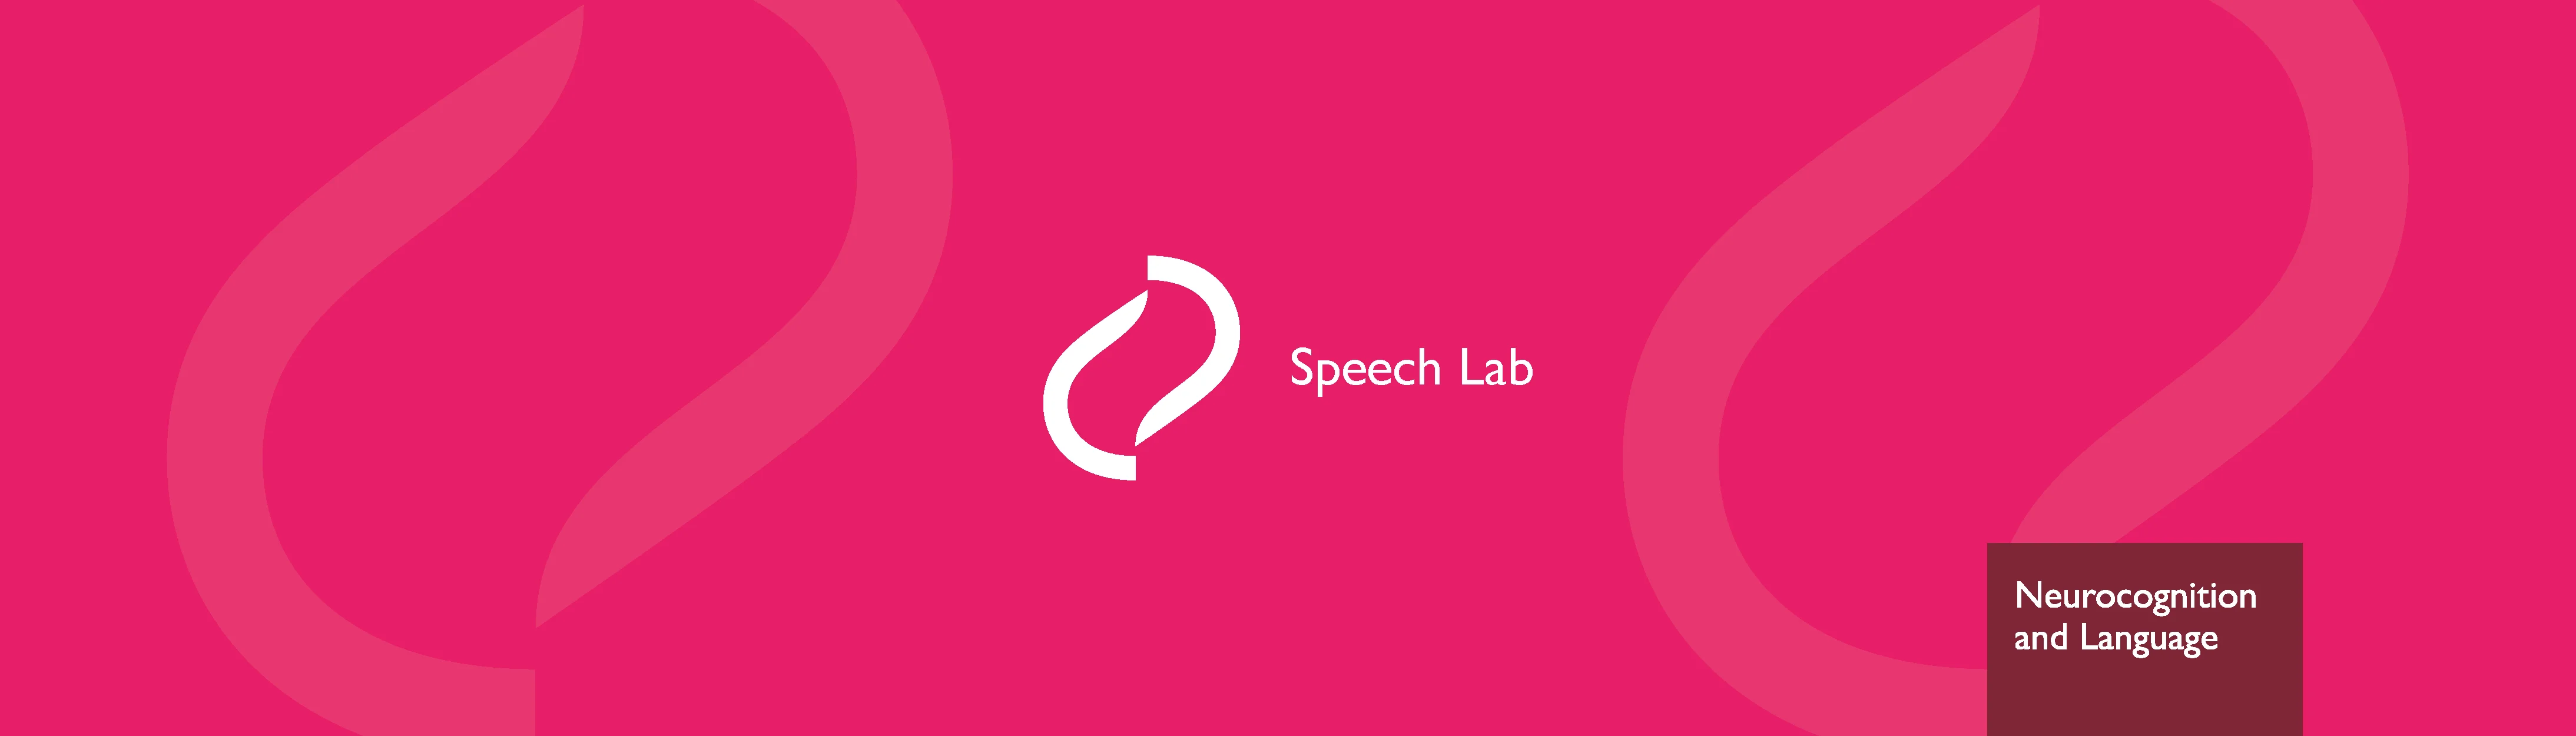 Speech Lab logo